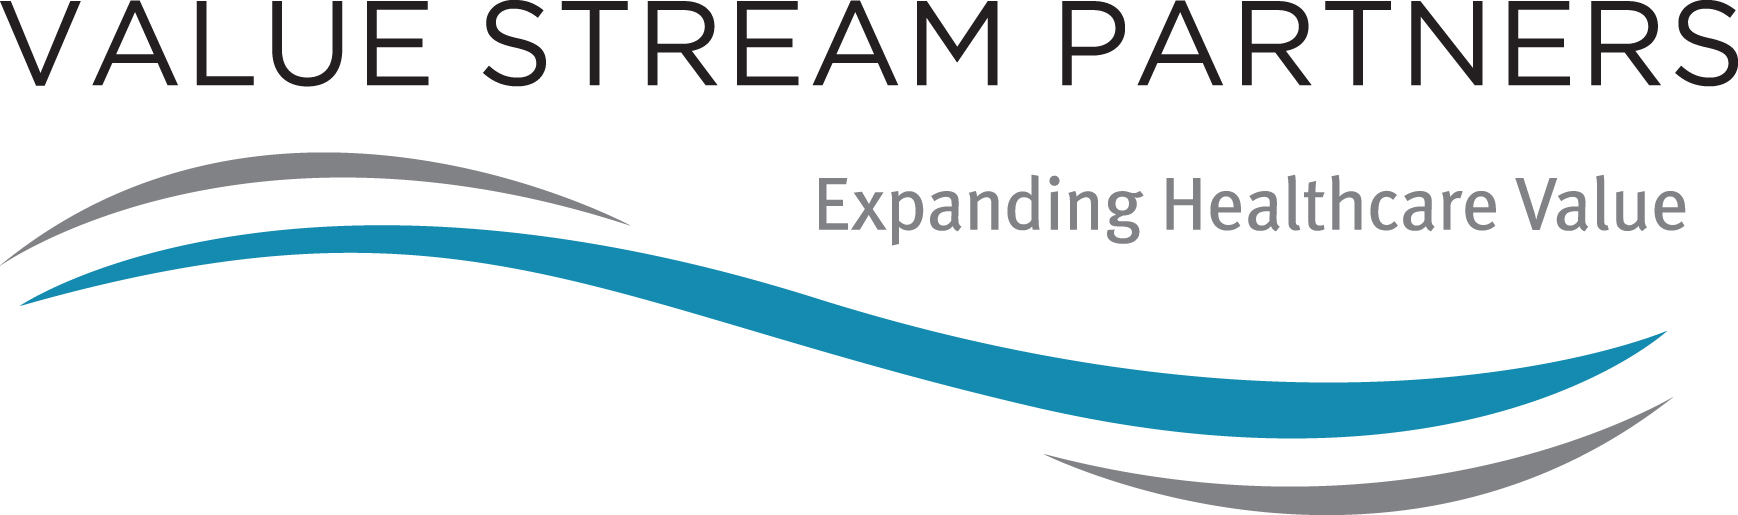 value stream partners logo